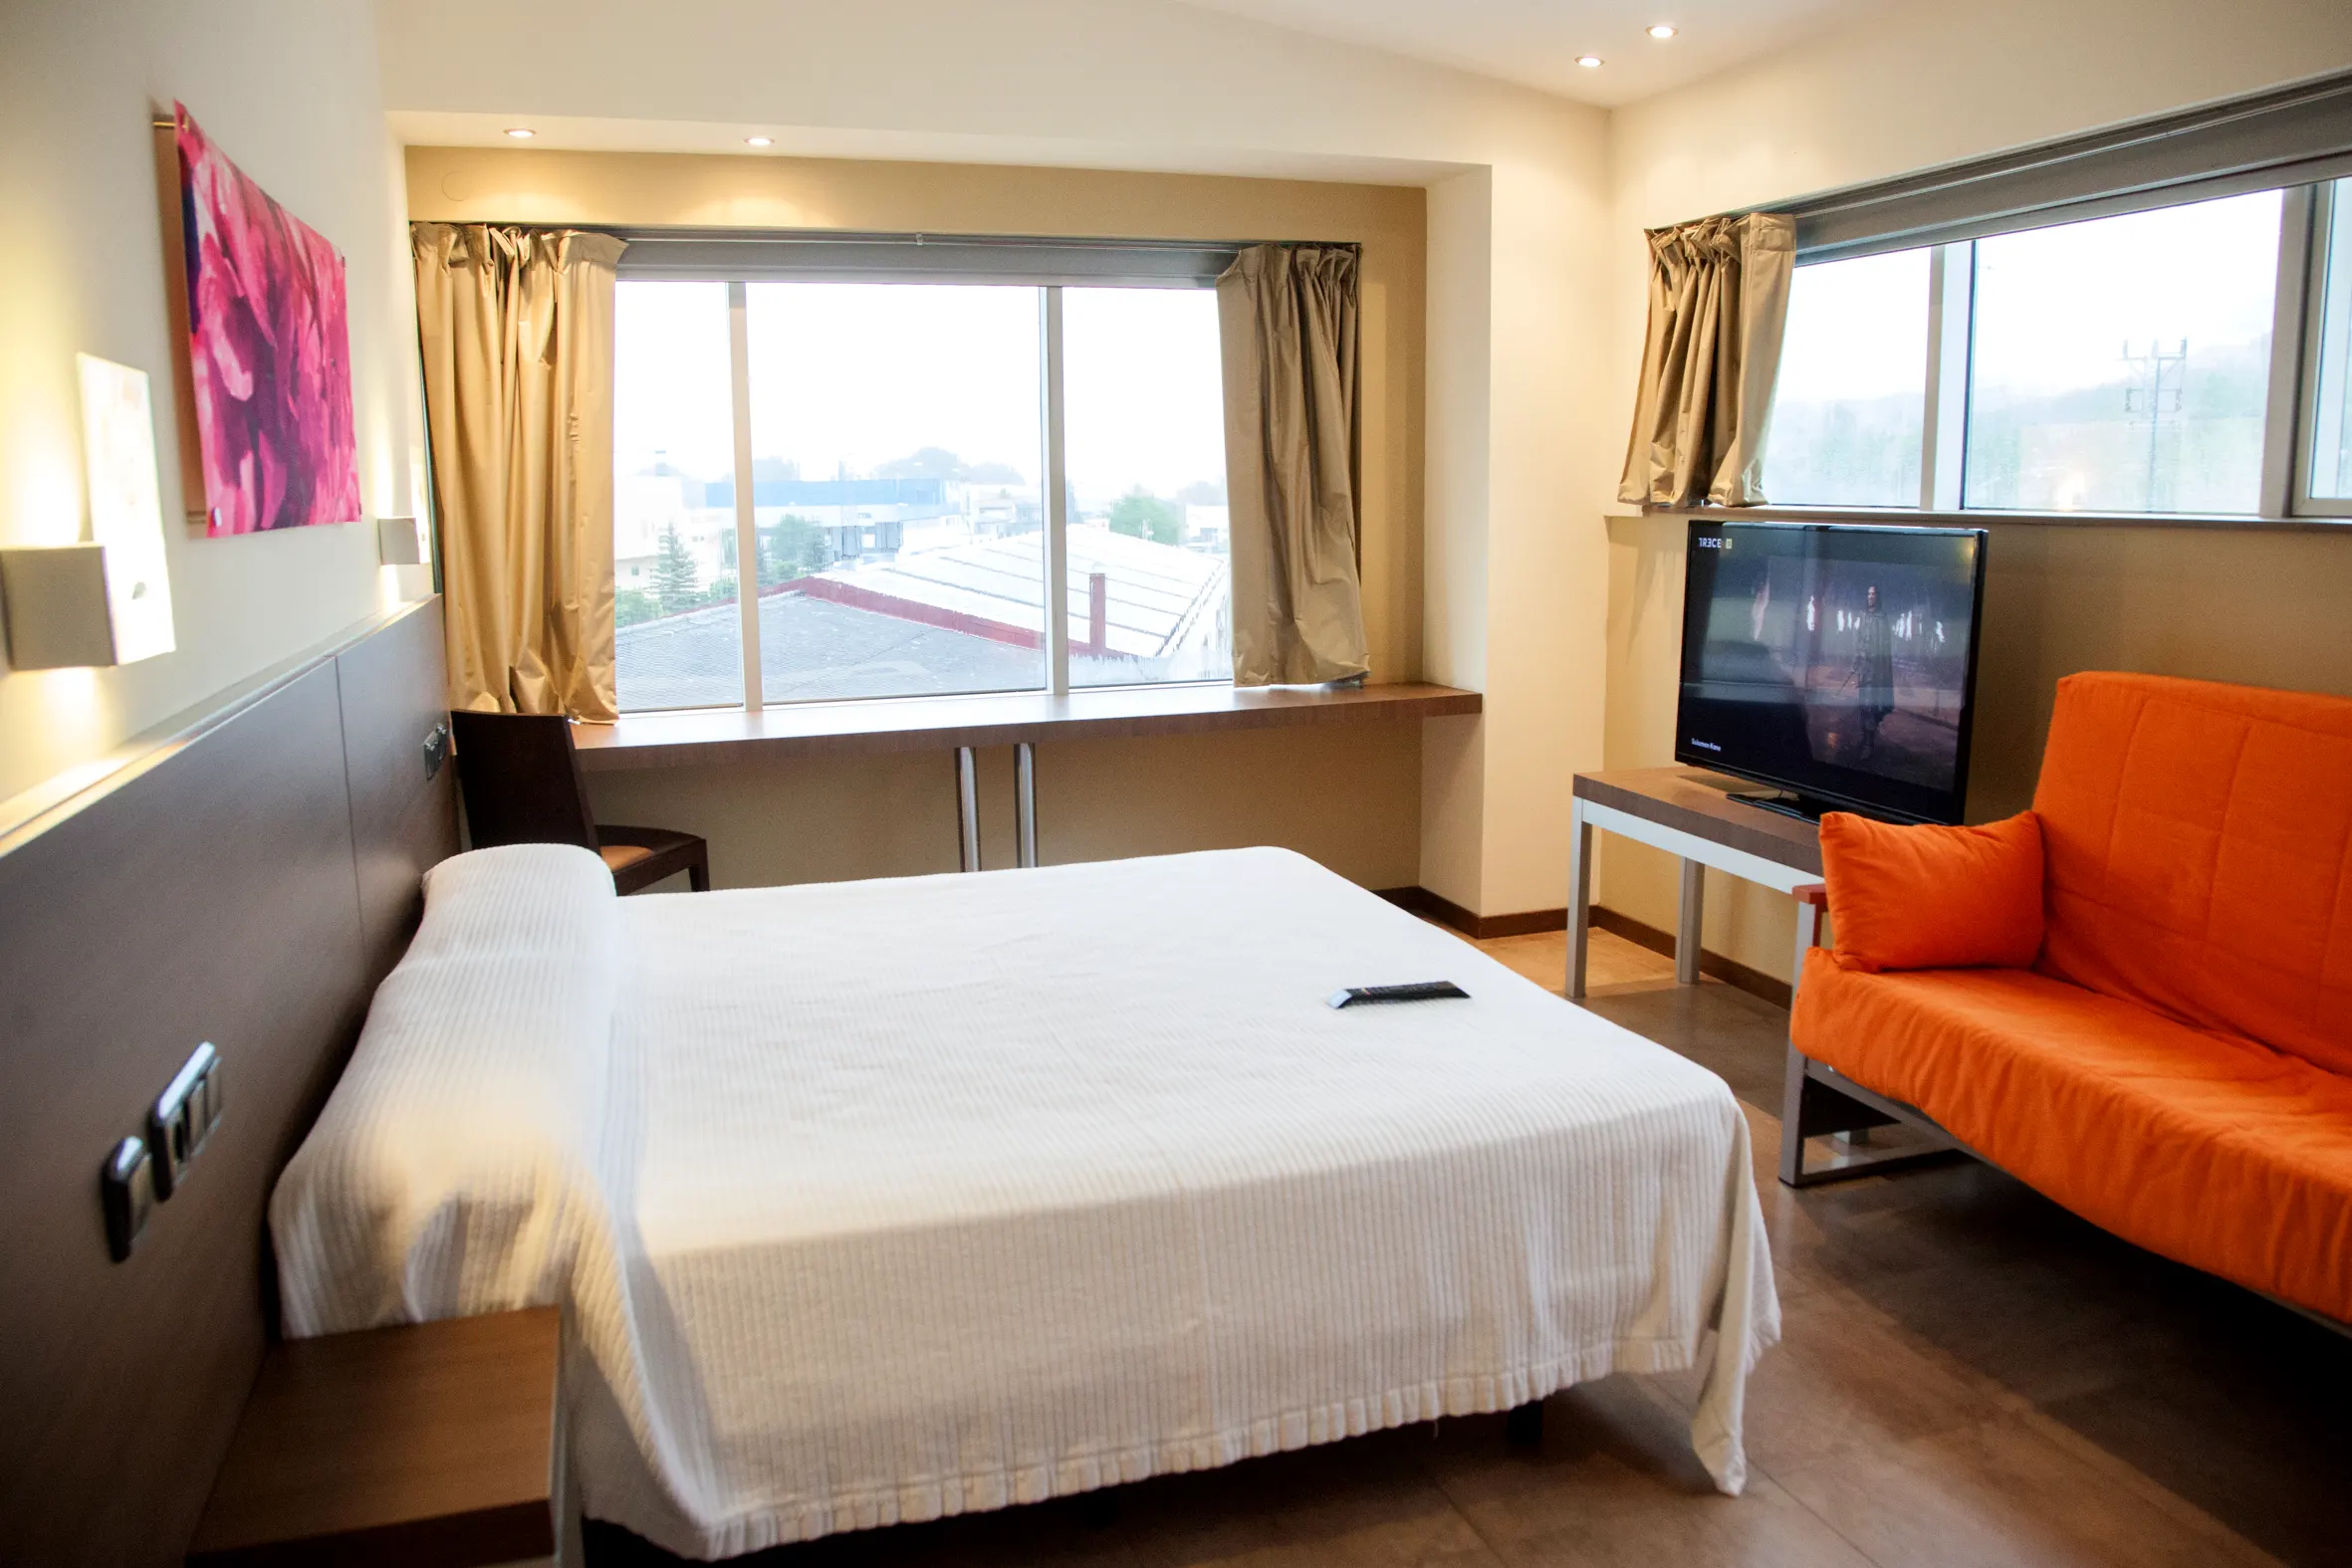 Hotel Hizelai en Alsasua suite 2